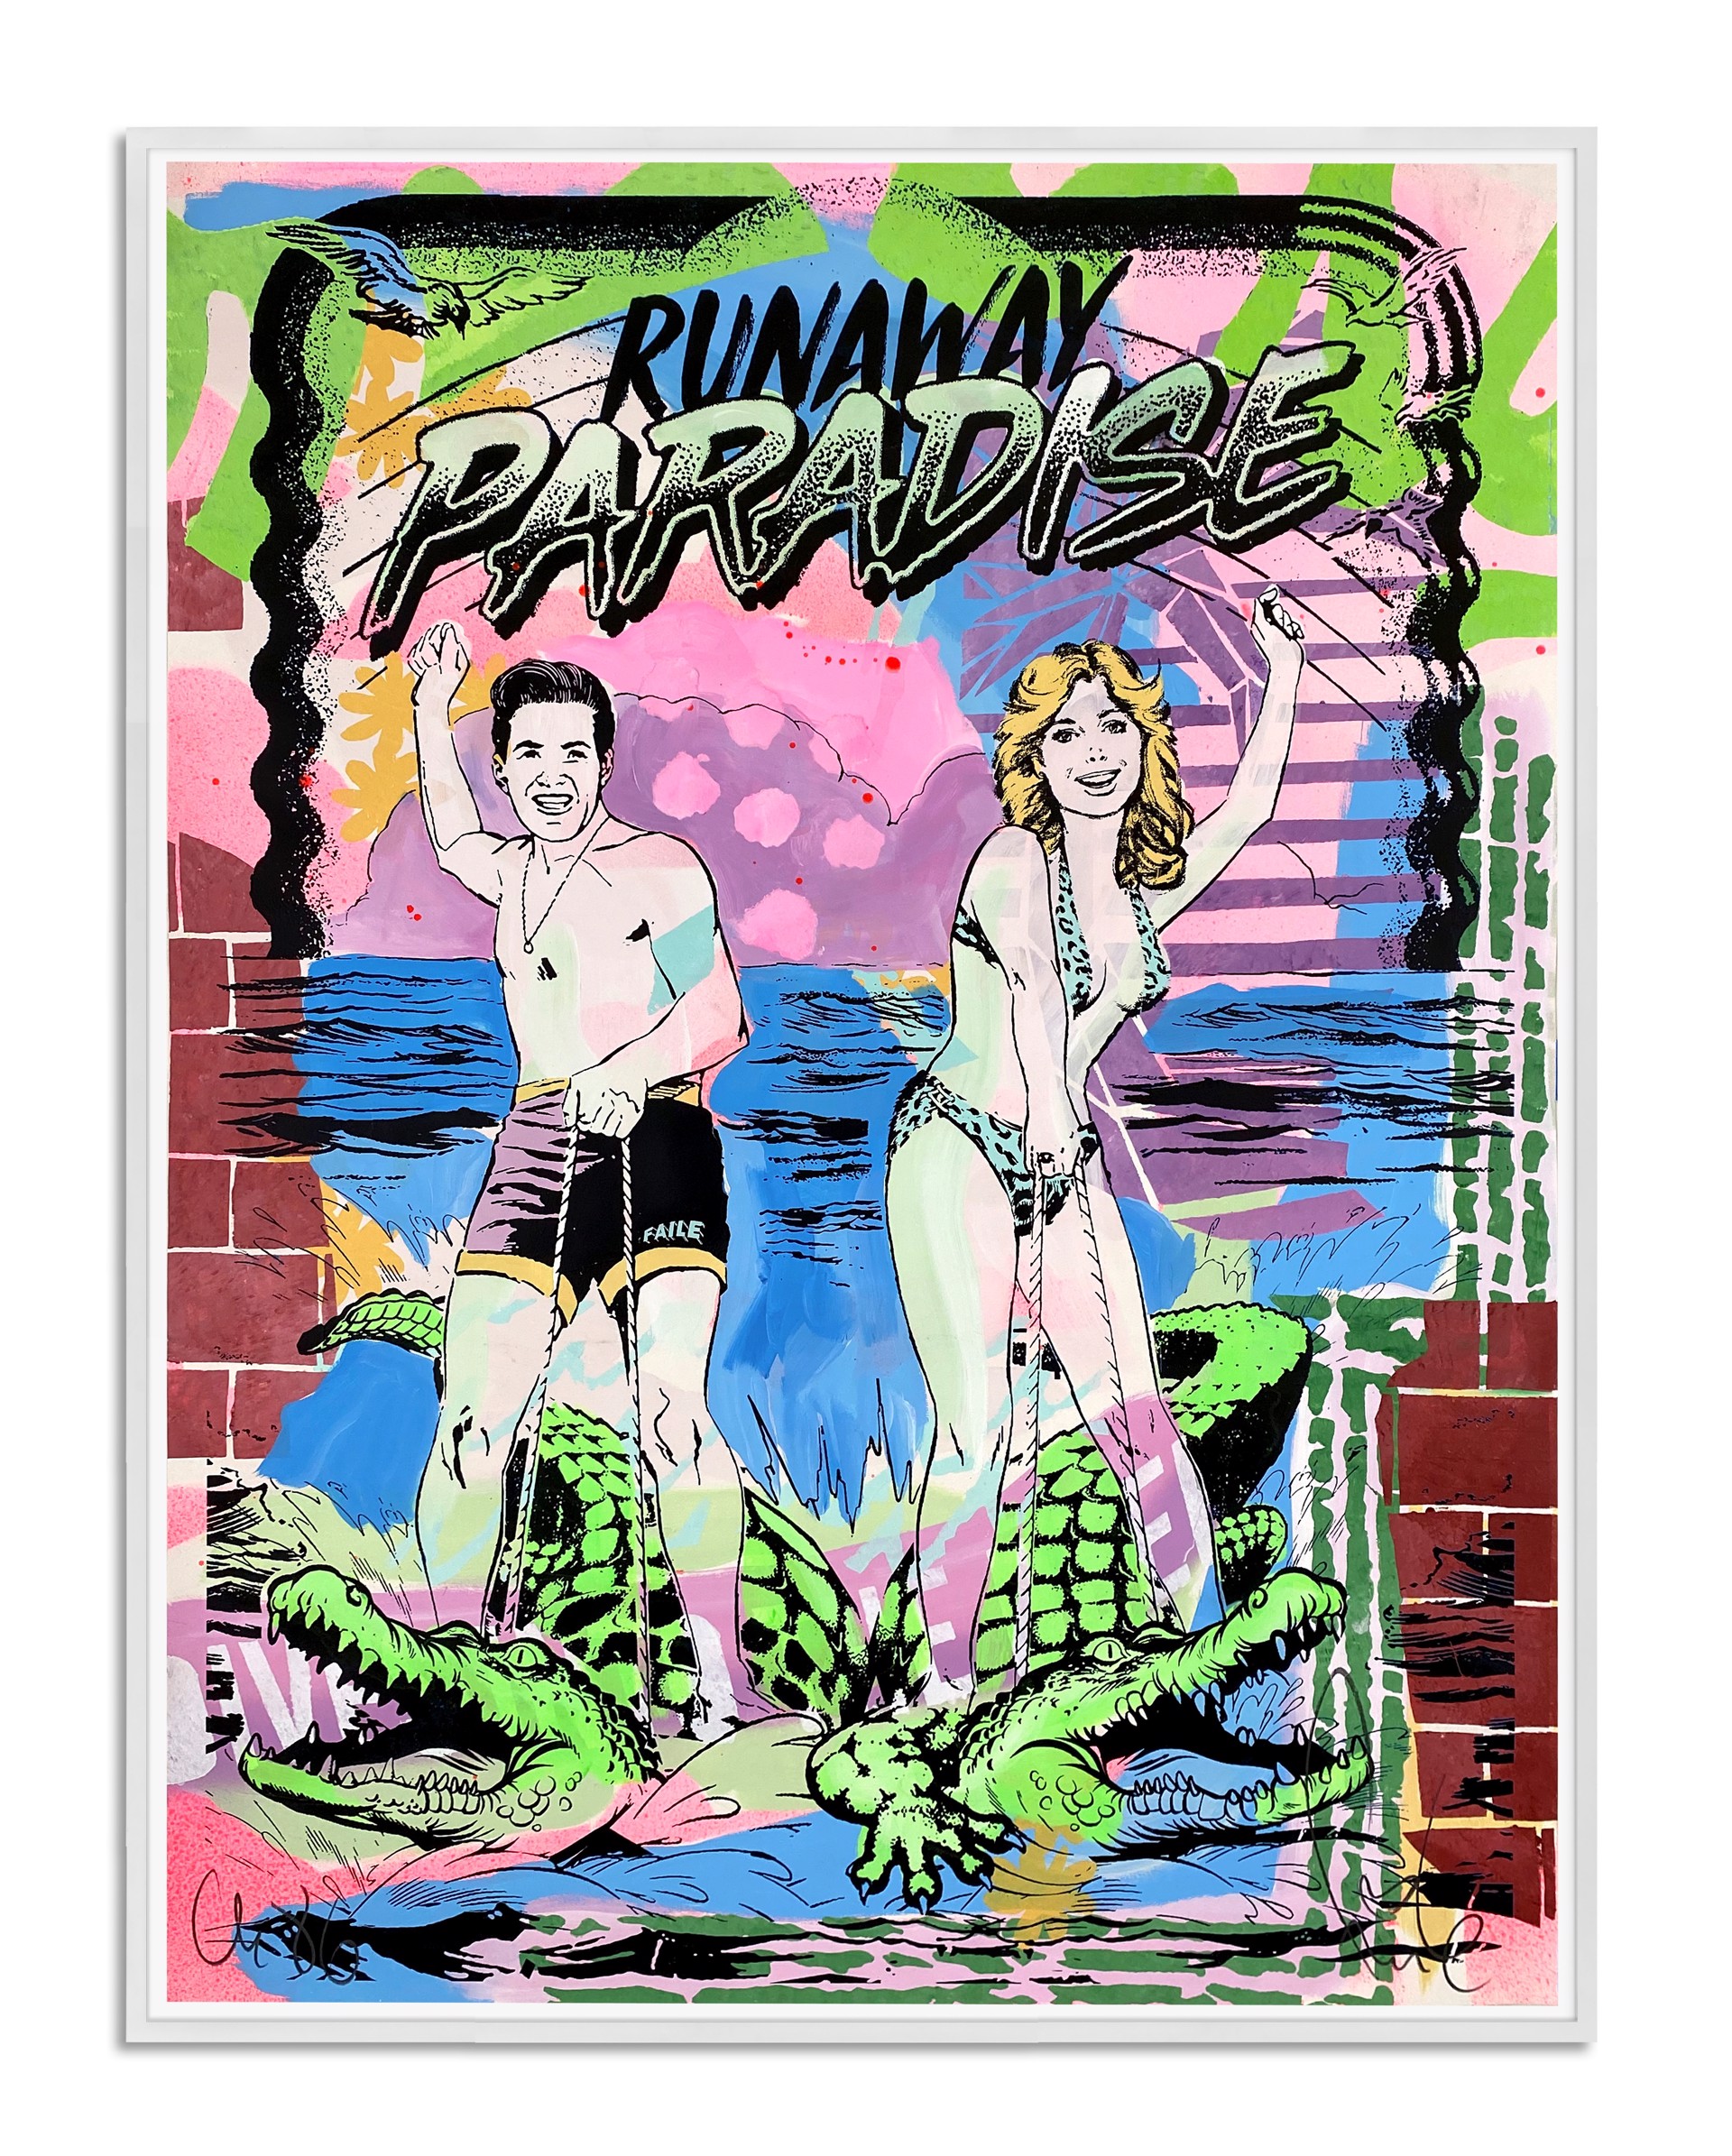 Runaway Paradise by FAILE